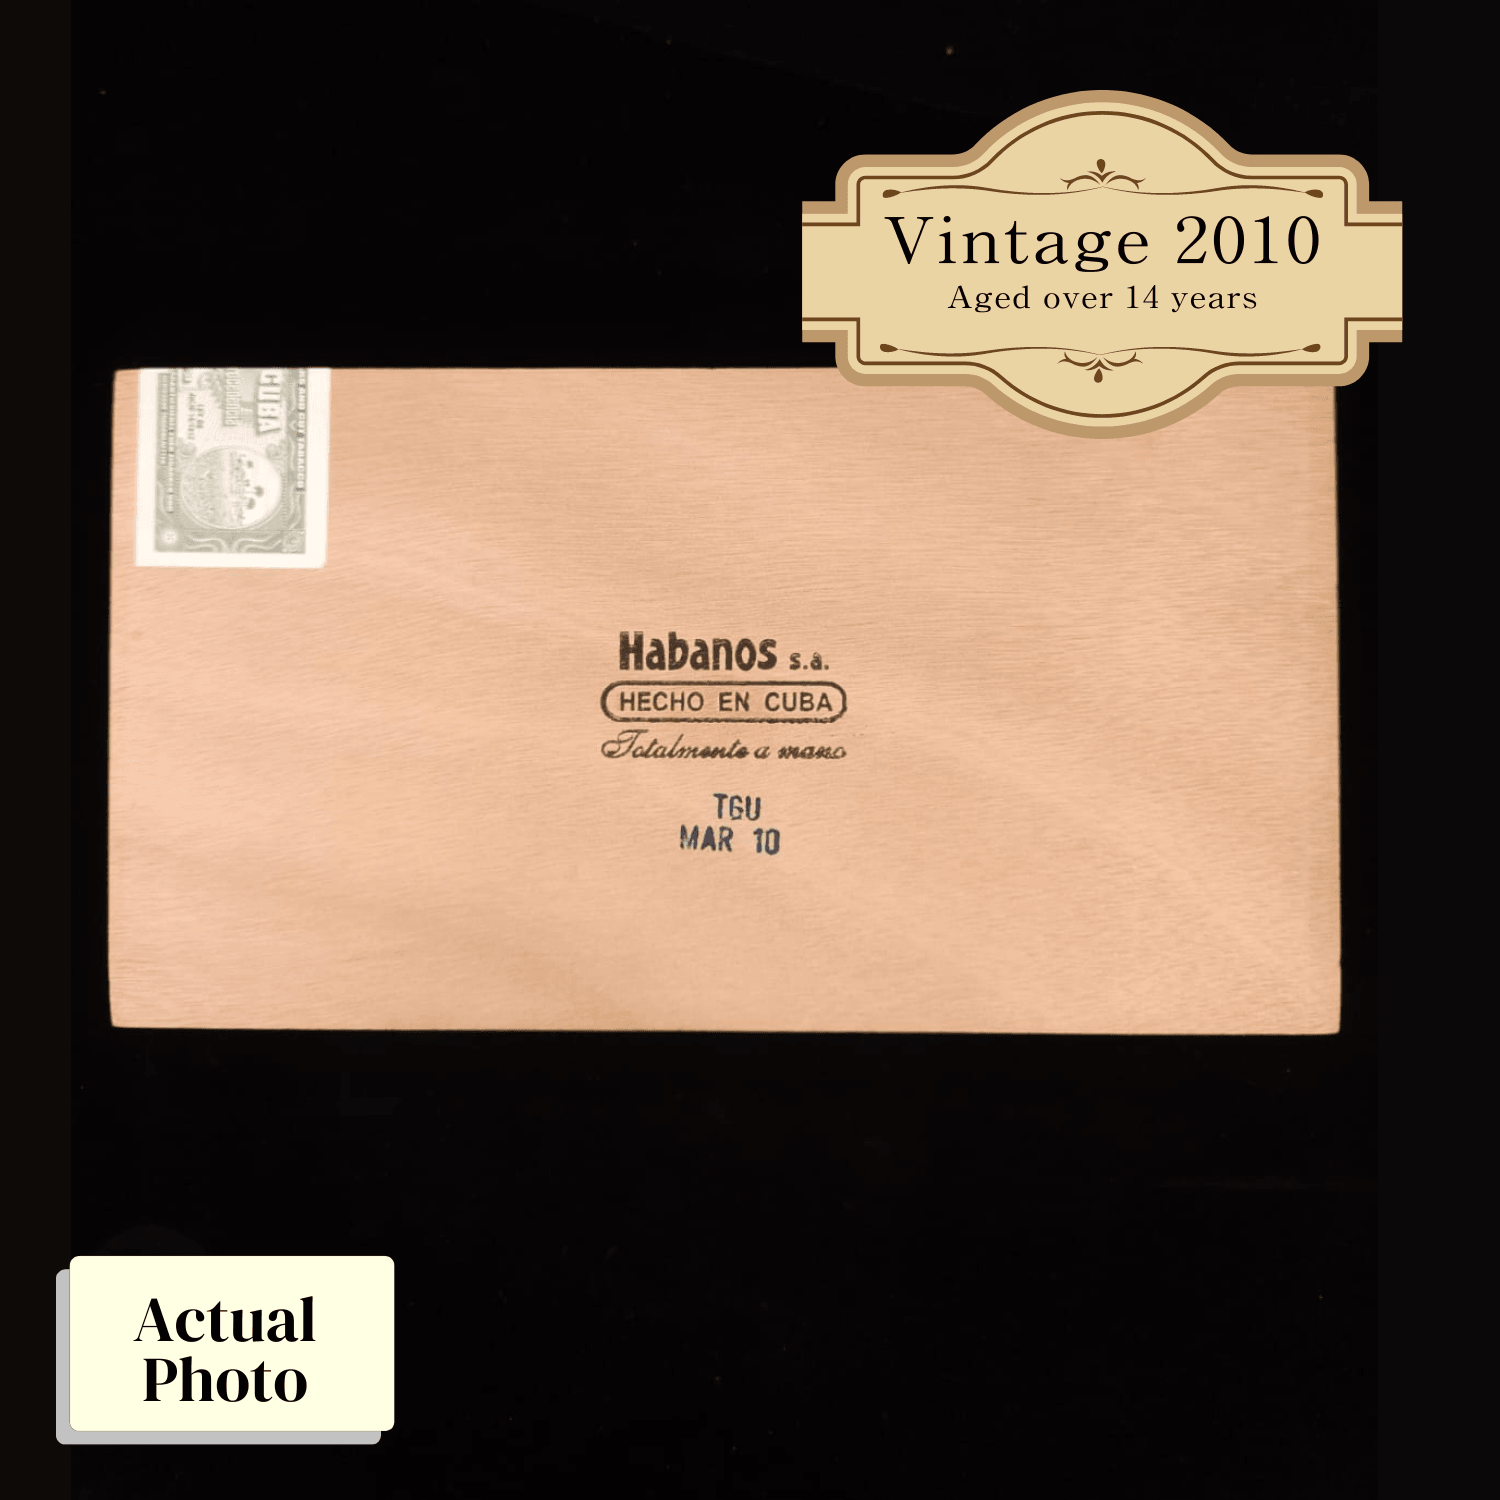 Vintage 2010 | Montecristo Edmundo | Box 25 (Box Code: TGU MAR 10) - hk.cohcigars